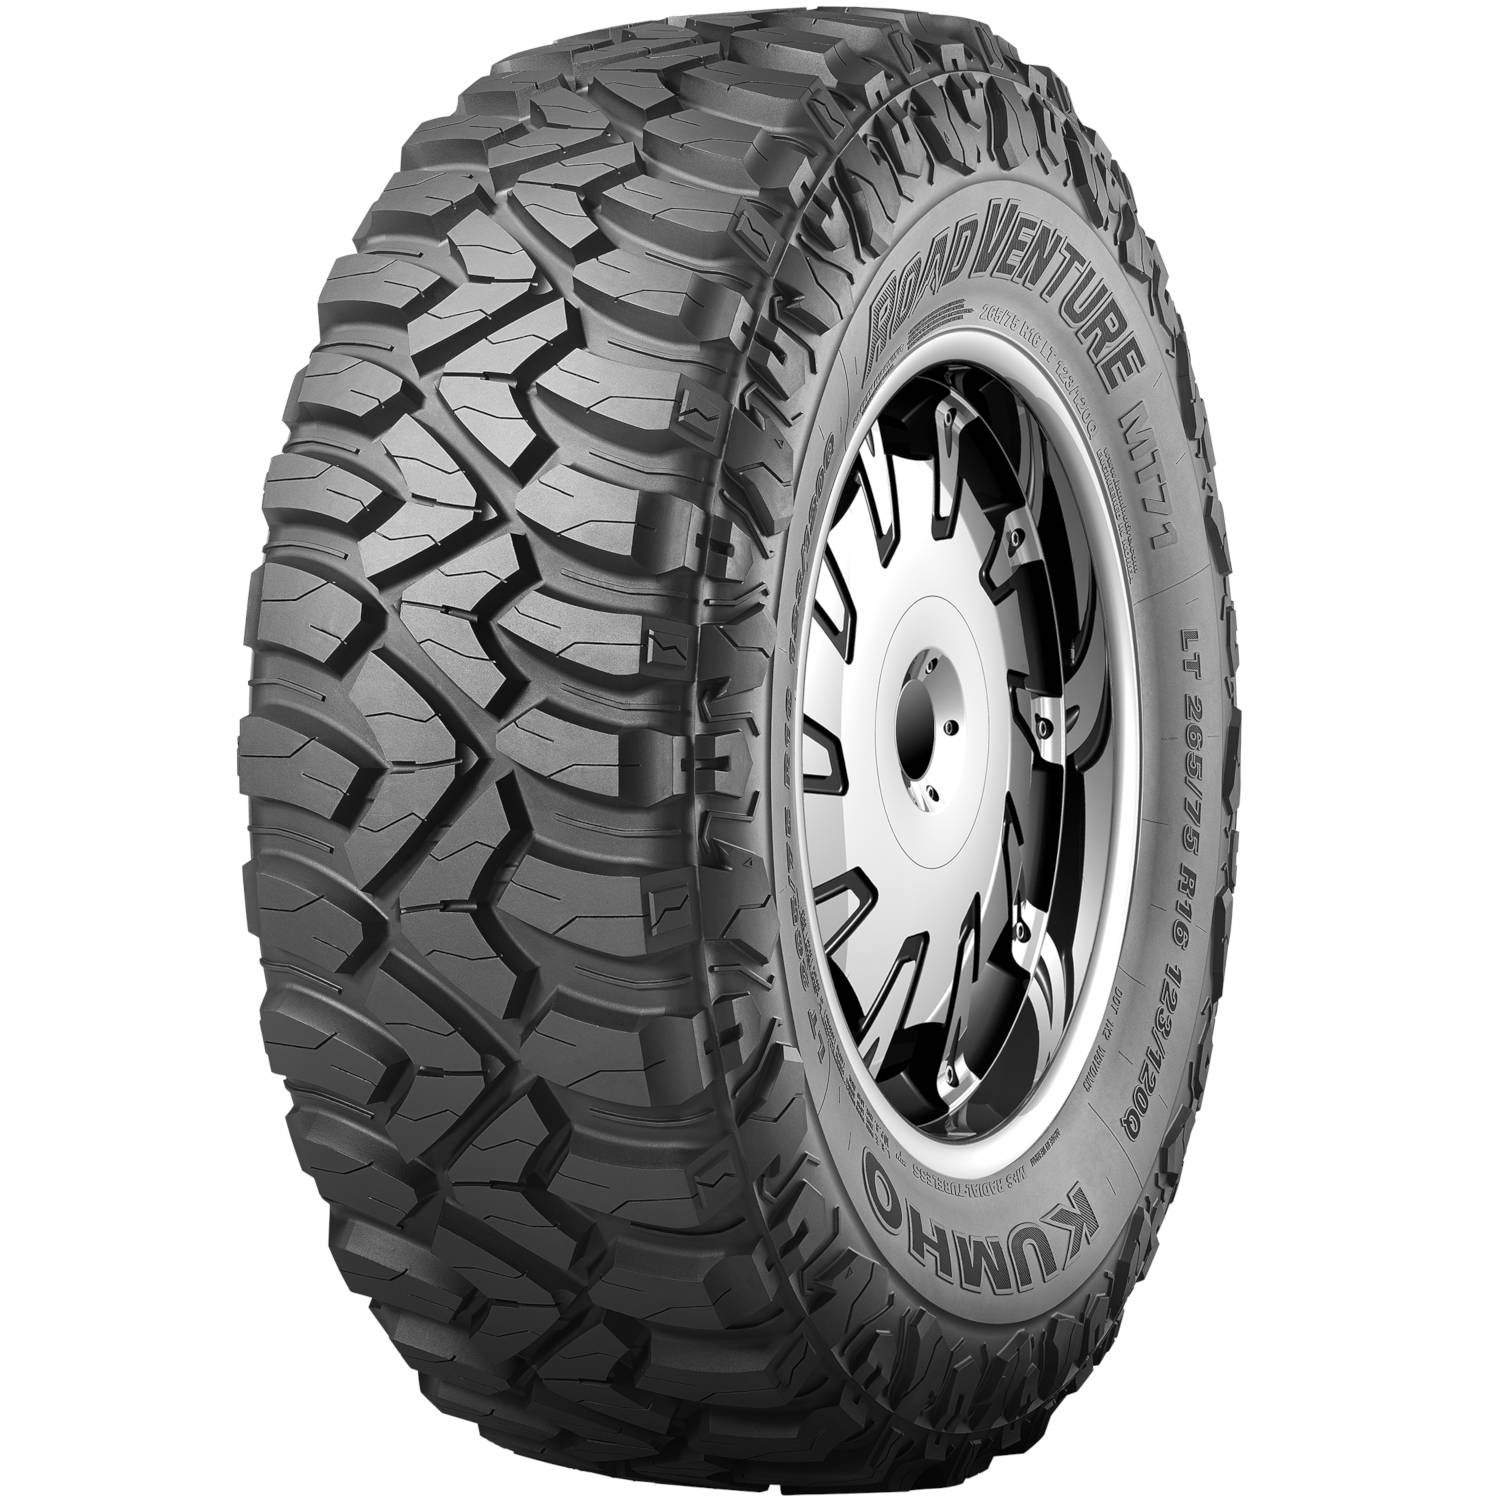 KUMHO ROAD VENTURE MT71 235/85R16LT (32X9.3R 16) Tires